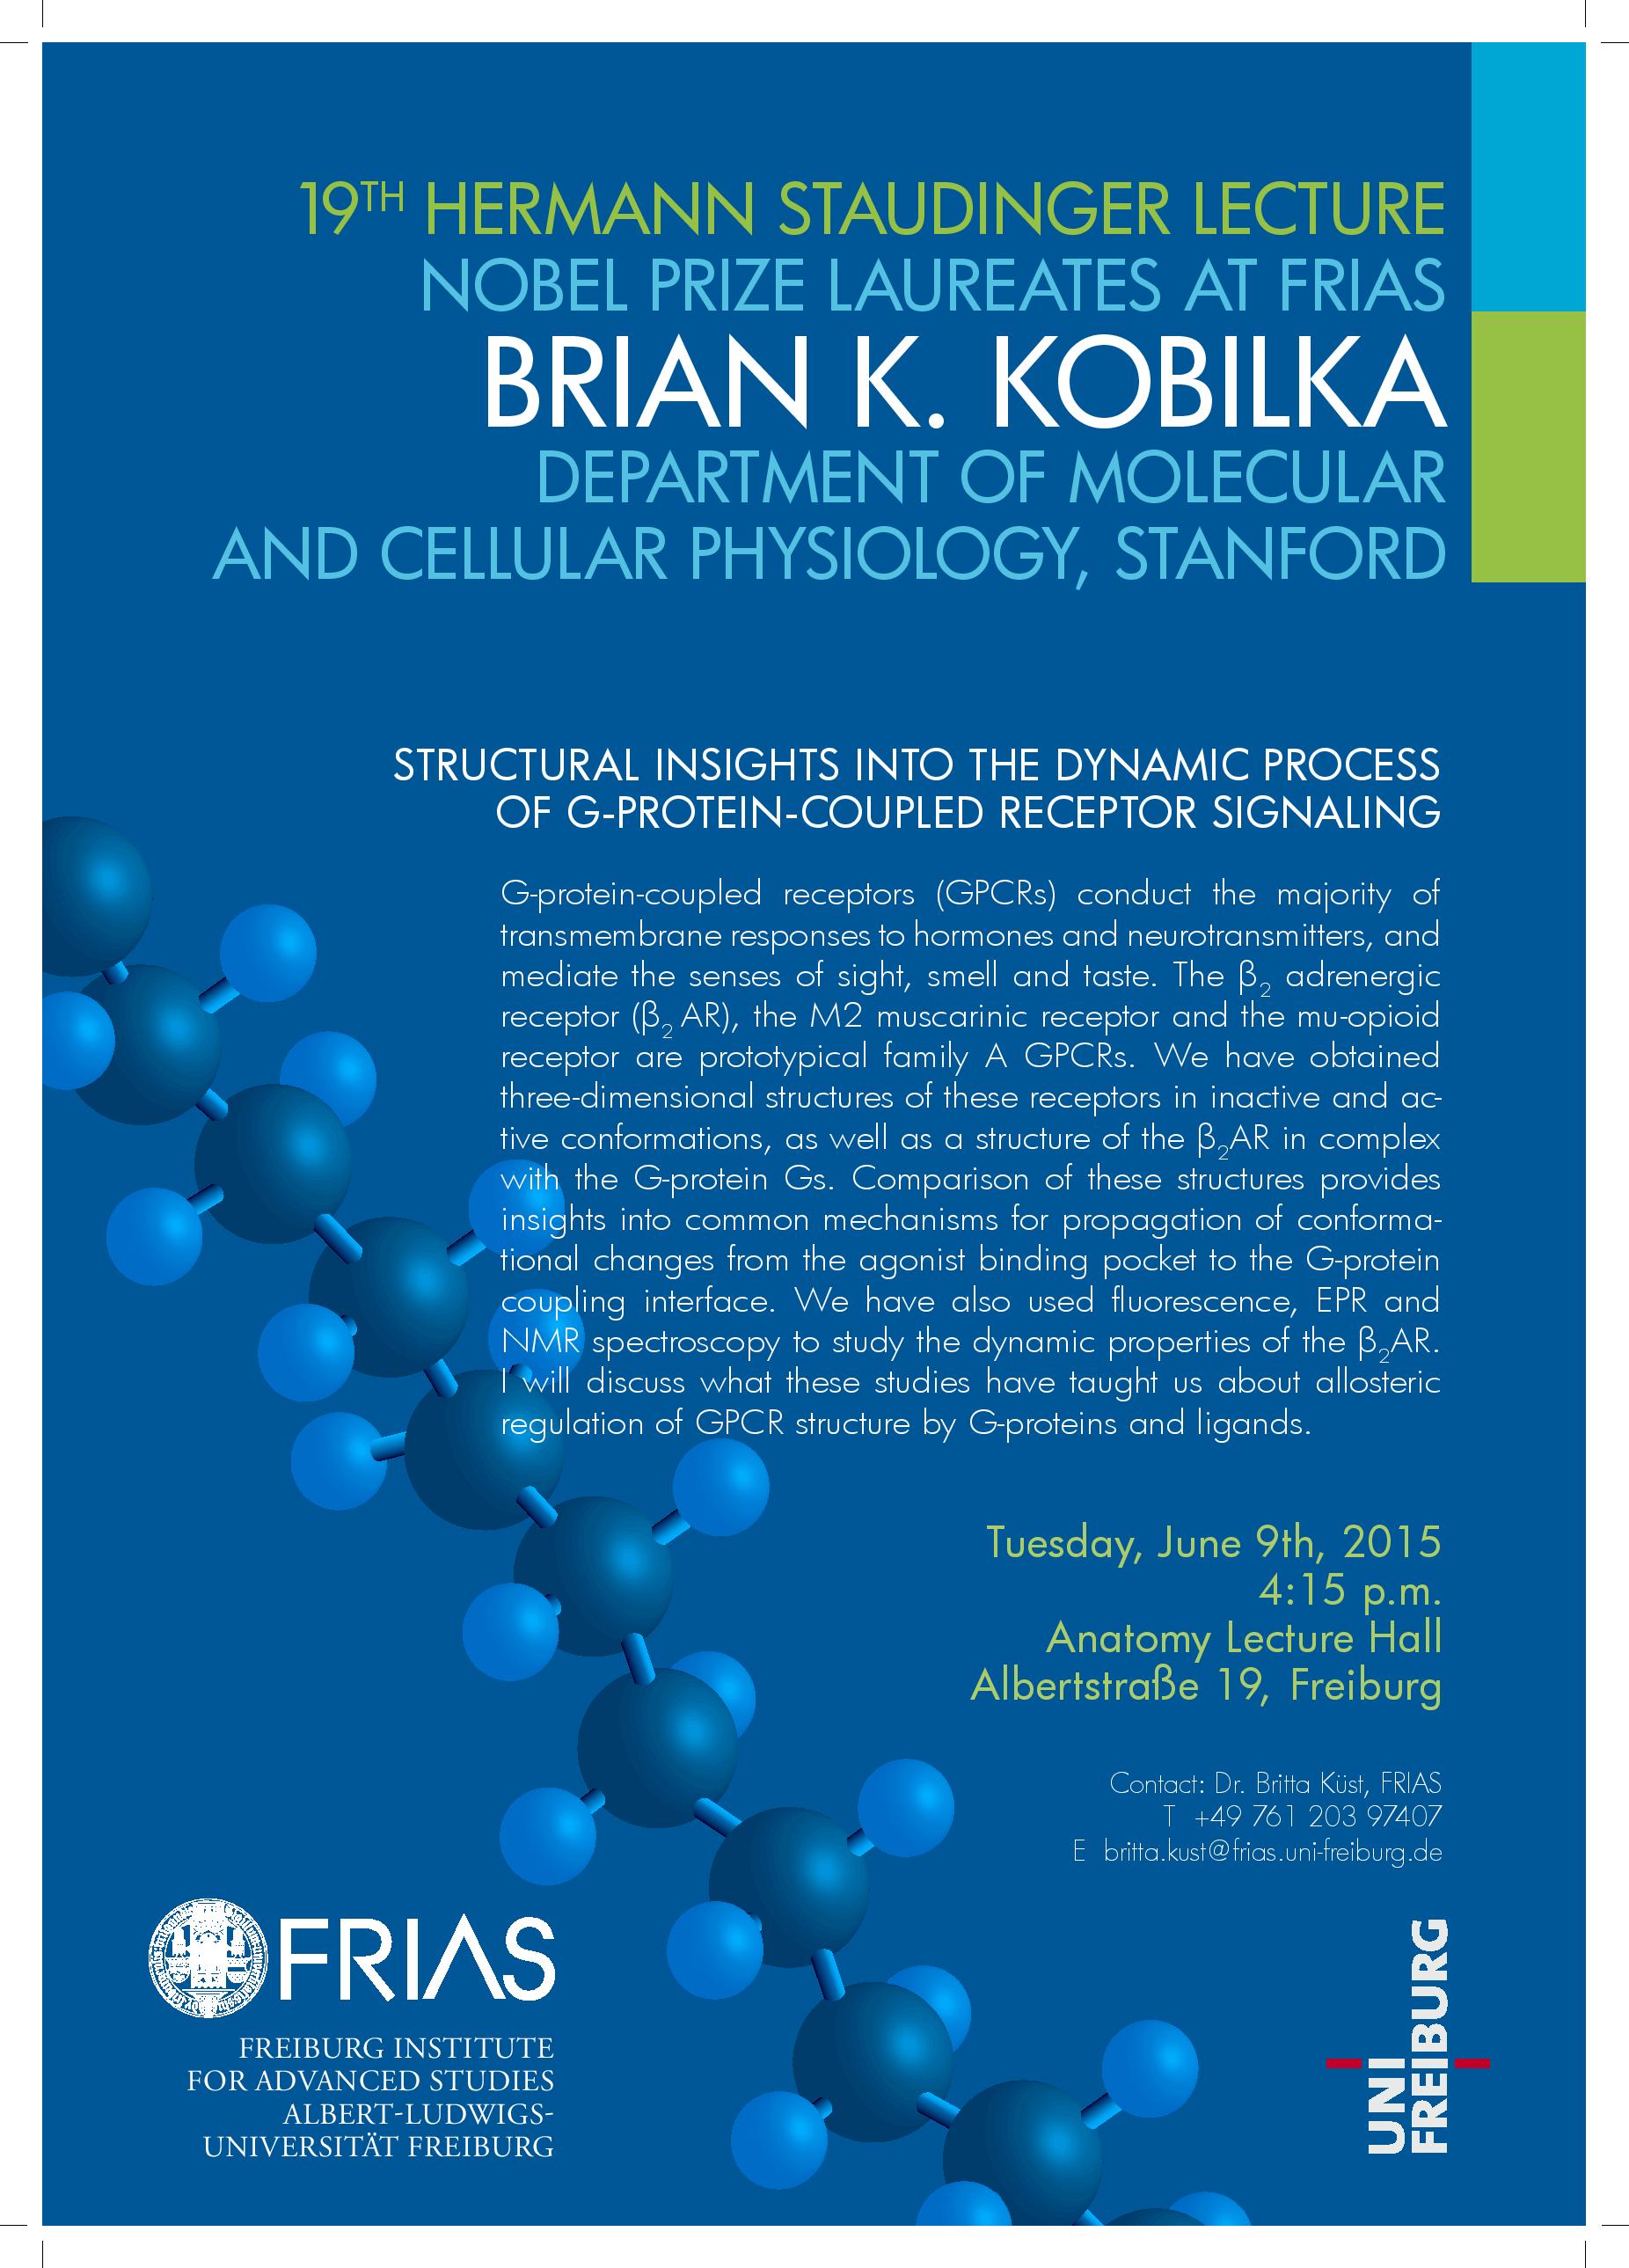 19th Hermann Staudinger Lecture with Nobel Laureate Brian K. Kobilka